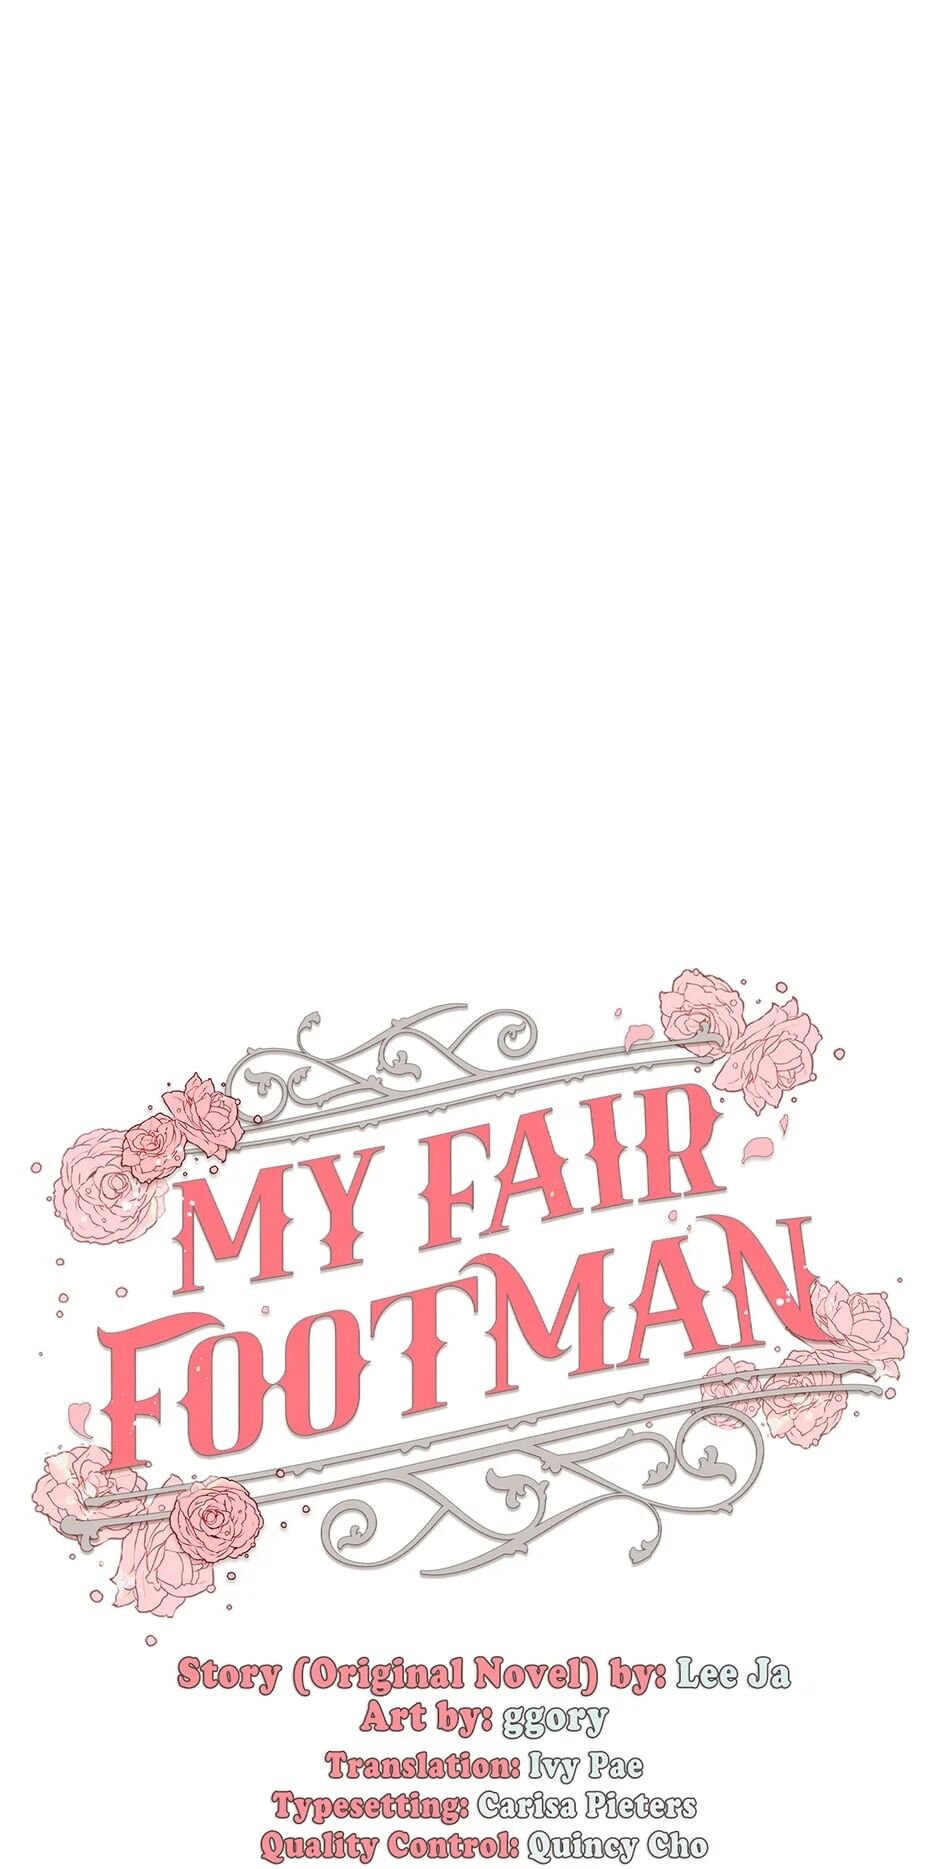 My Fair Footman - Page 1